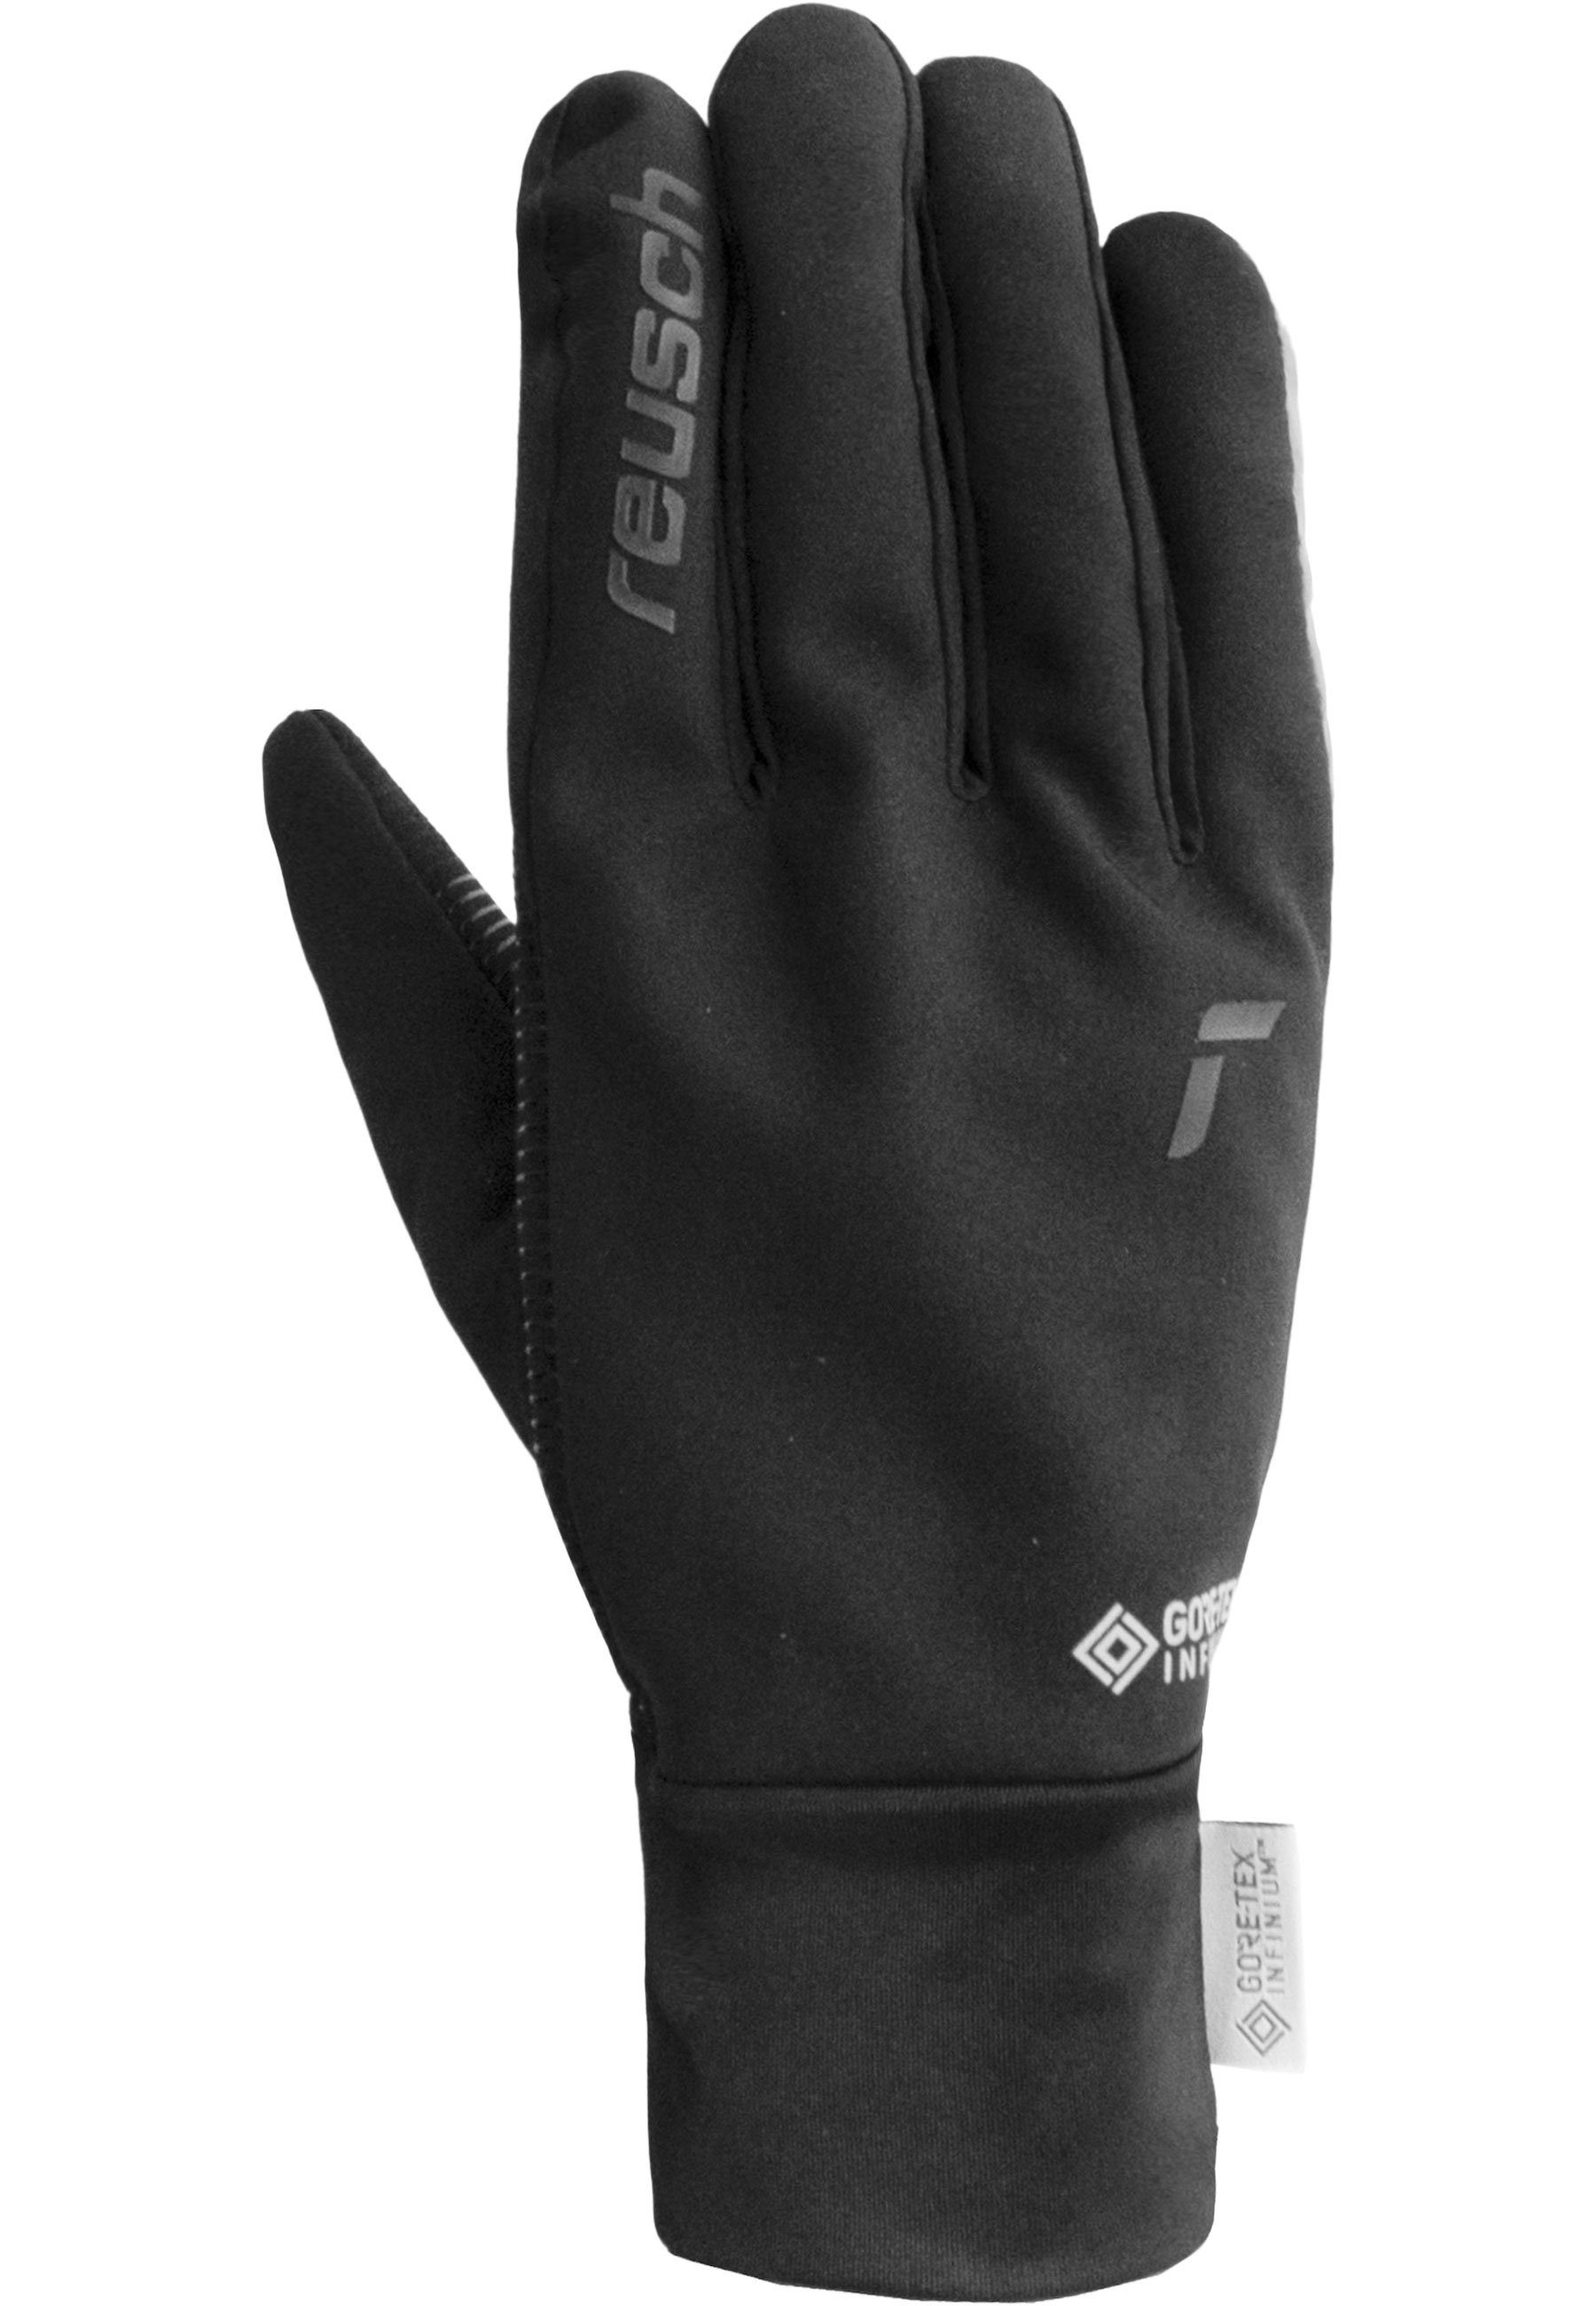 Reusch mit GORE-TEX INFINIUM Touchscreen-Funktion Laufhandschuhe Glove Multisport